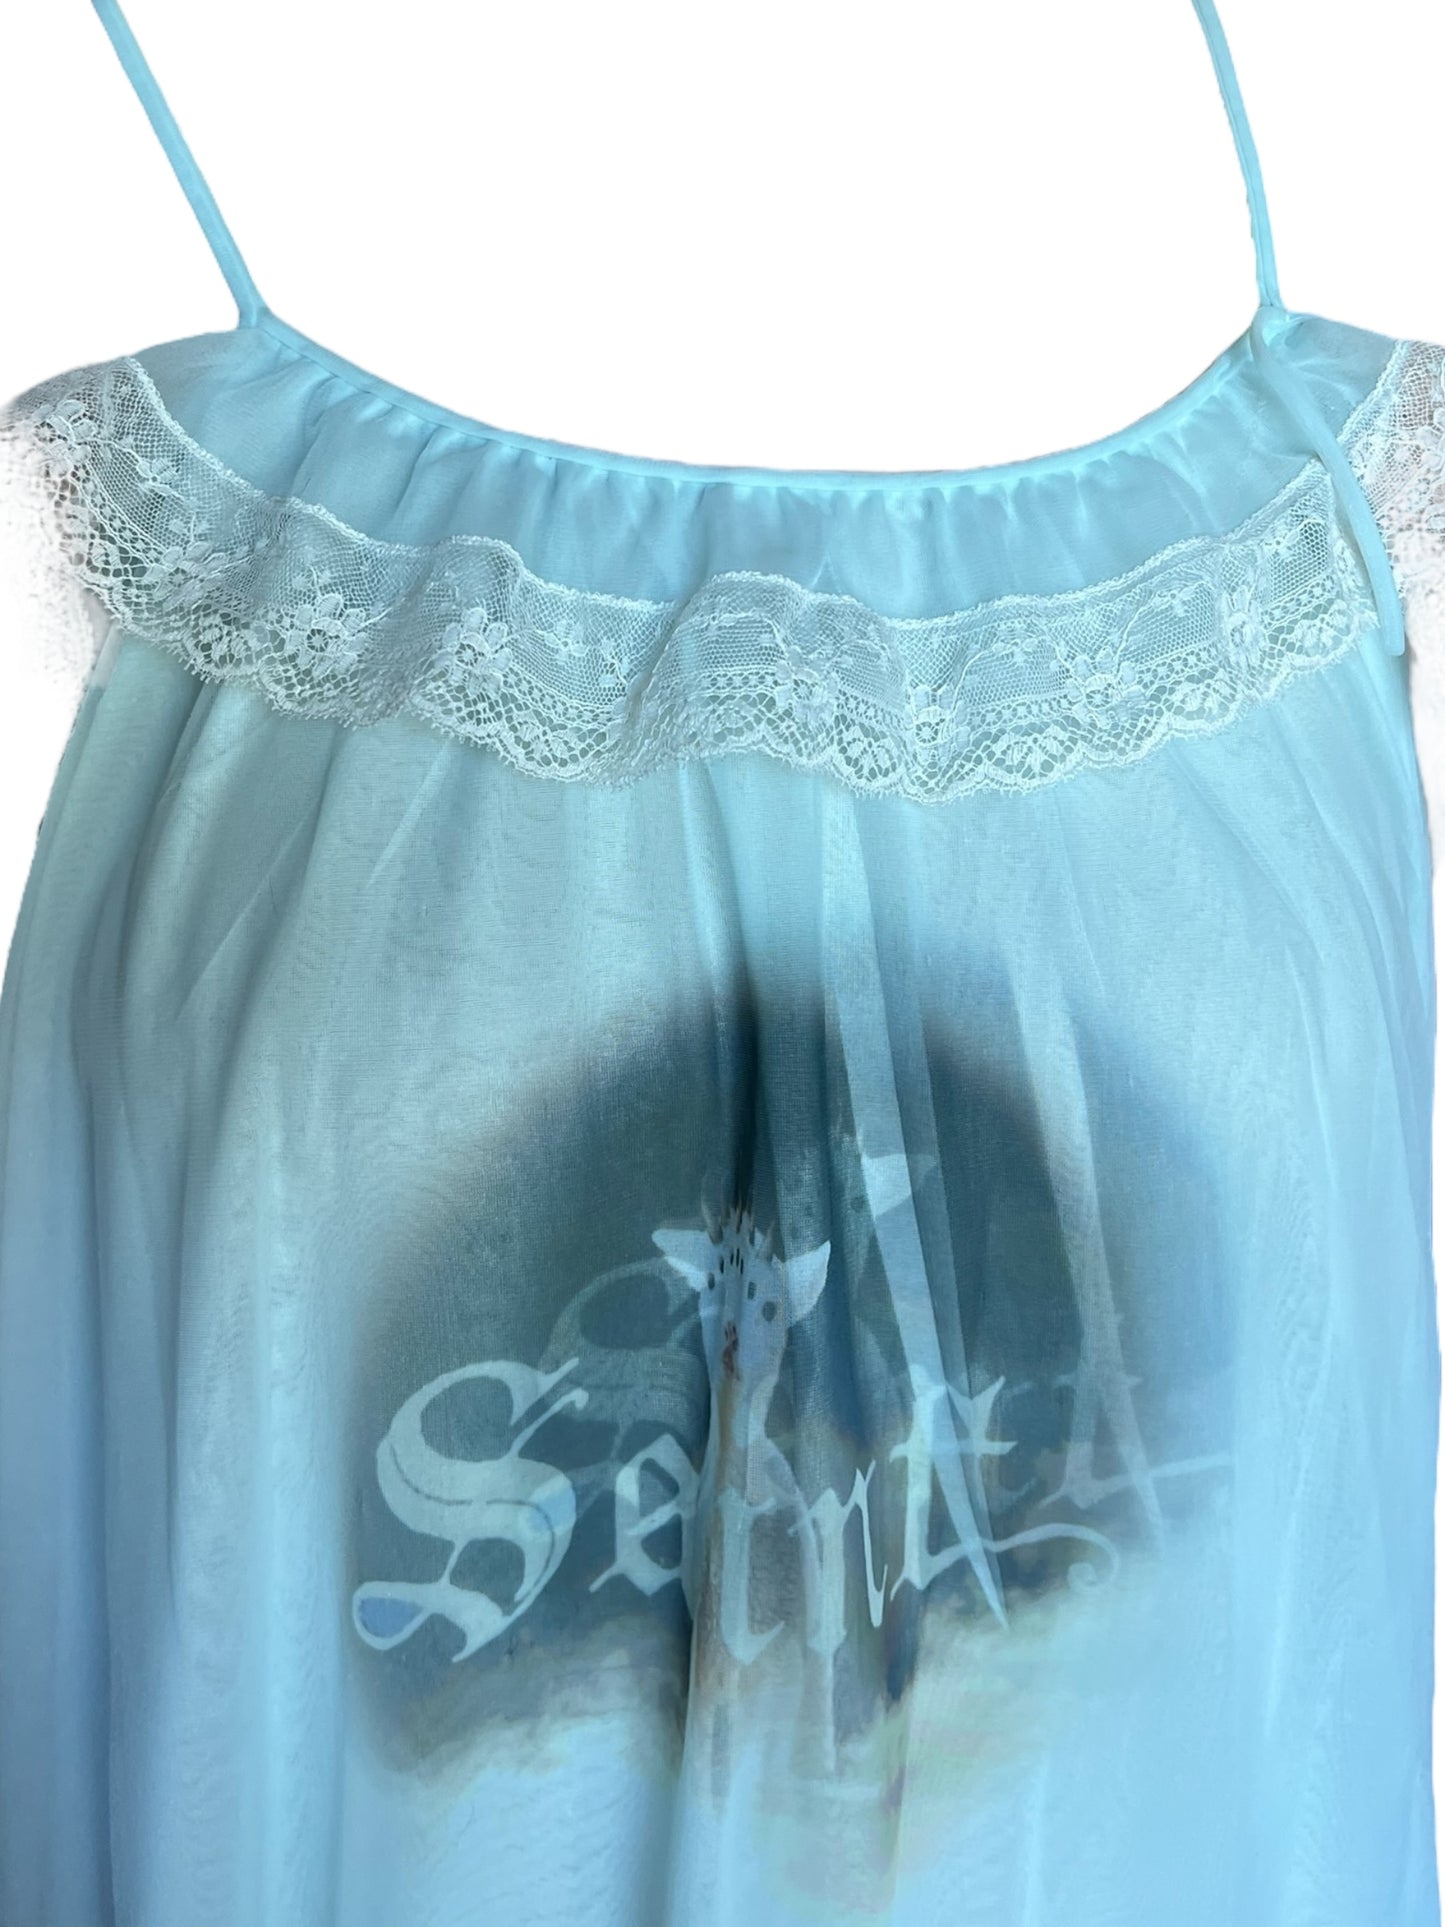 Saint Teal Dress - XL